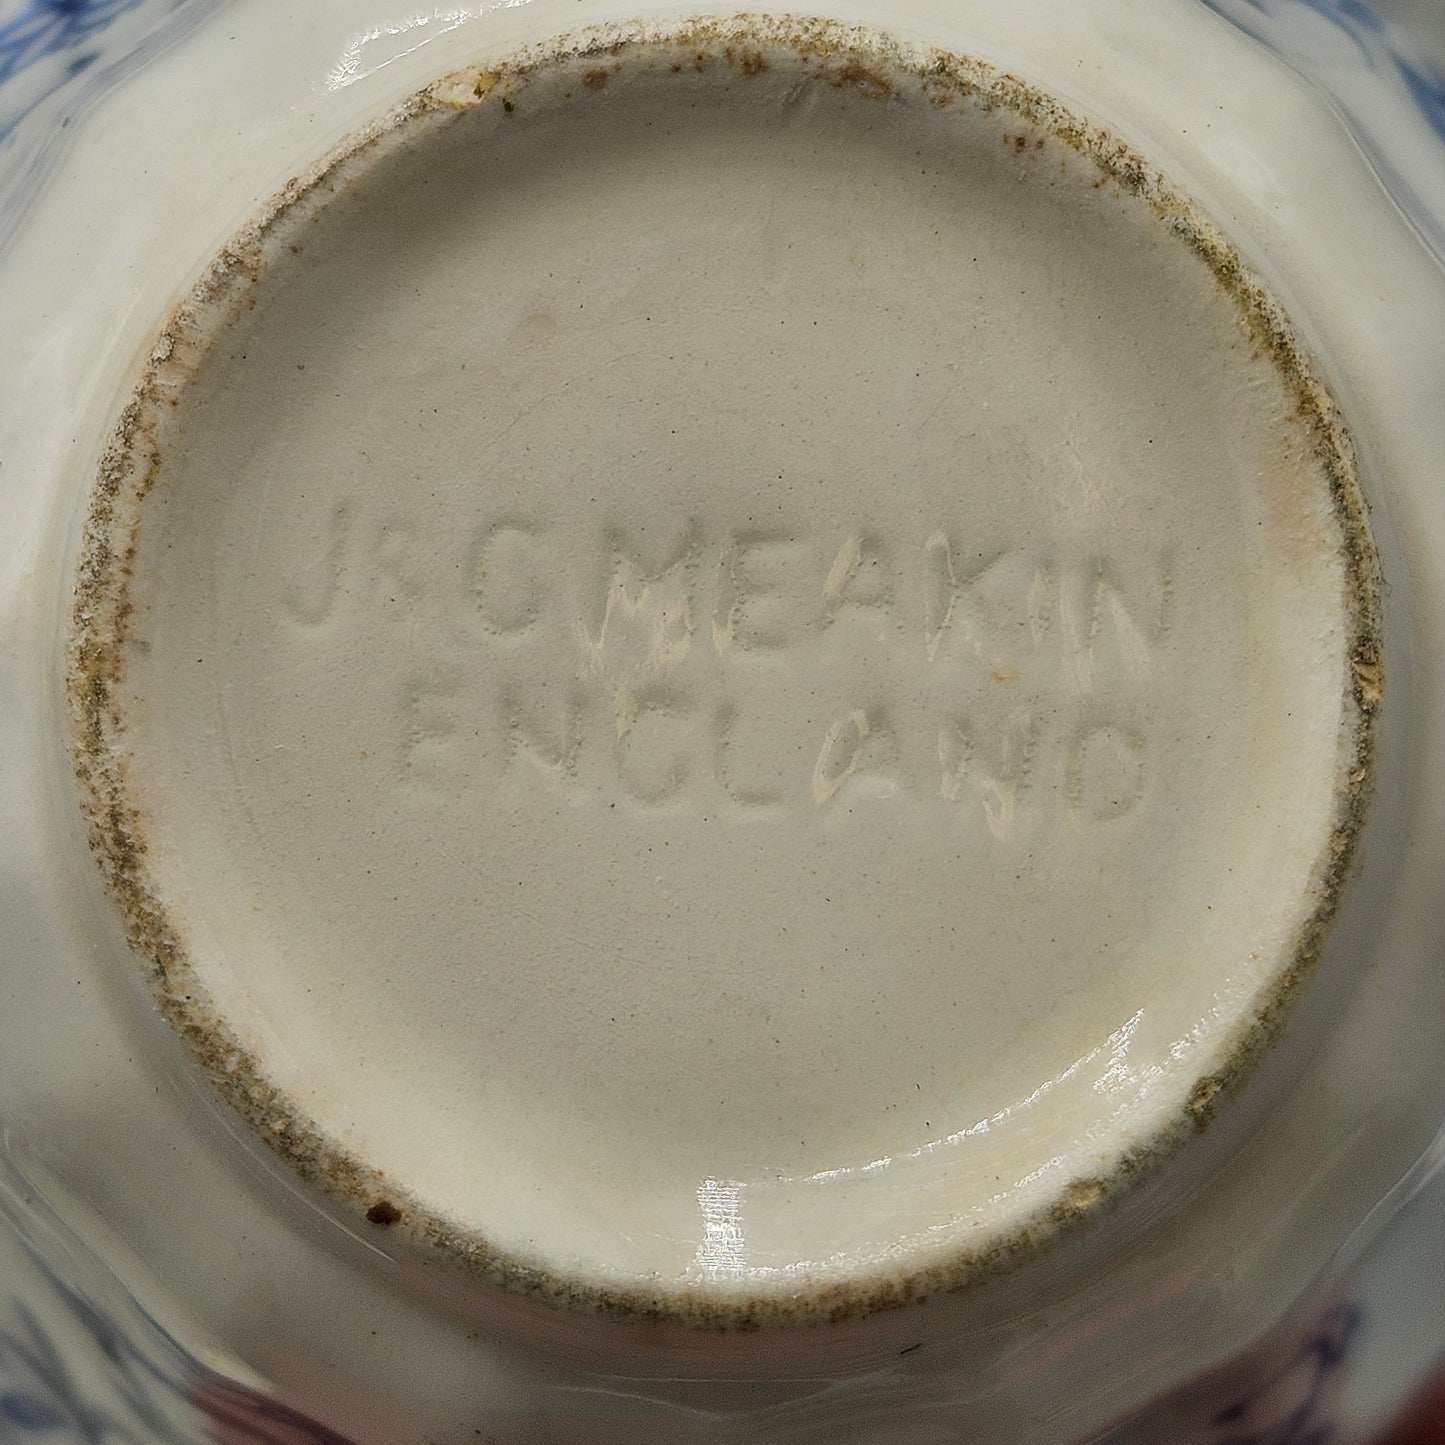 Vintage Set of J&G Meakin England Classic Nordic Blue Onion ~ 3 Saucers & 11 Teacups